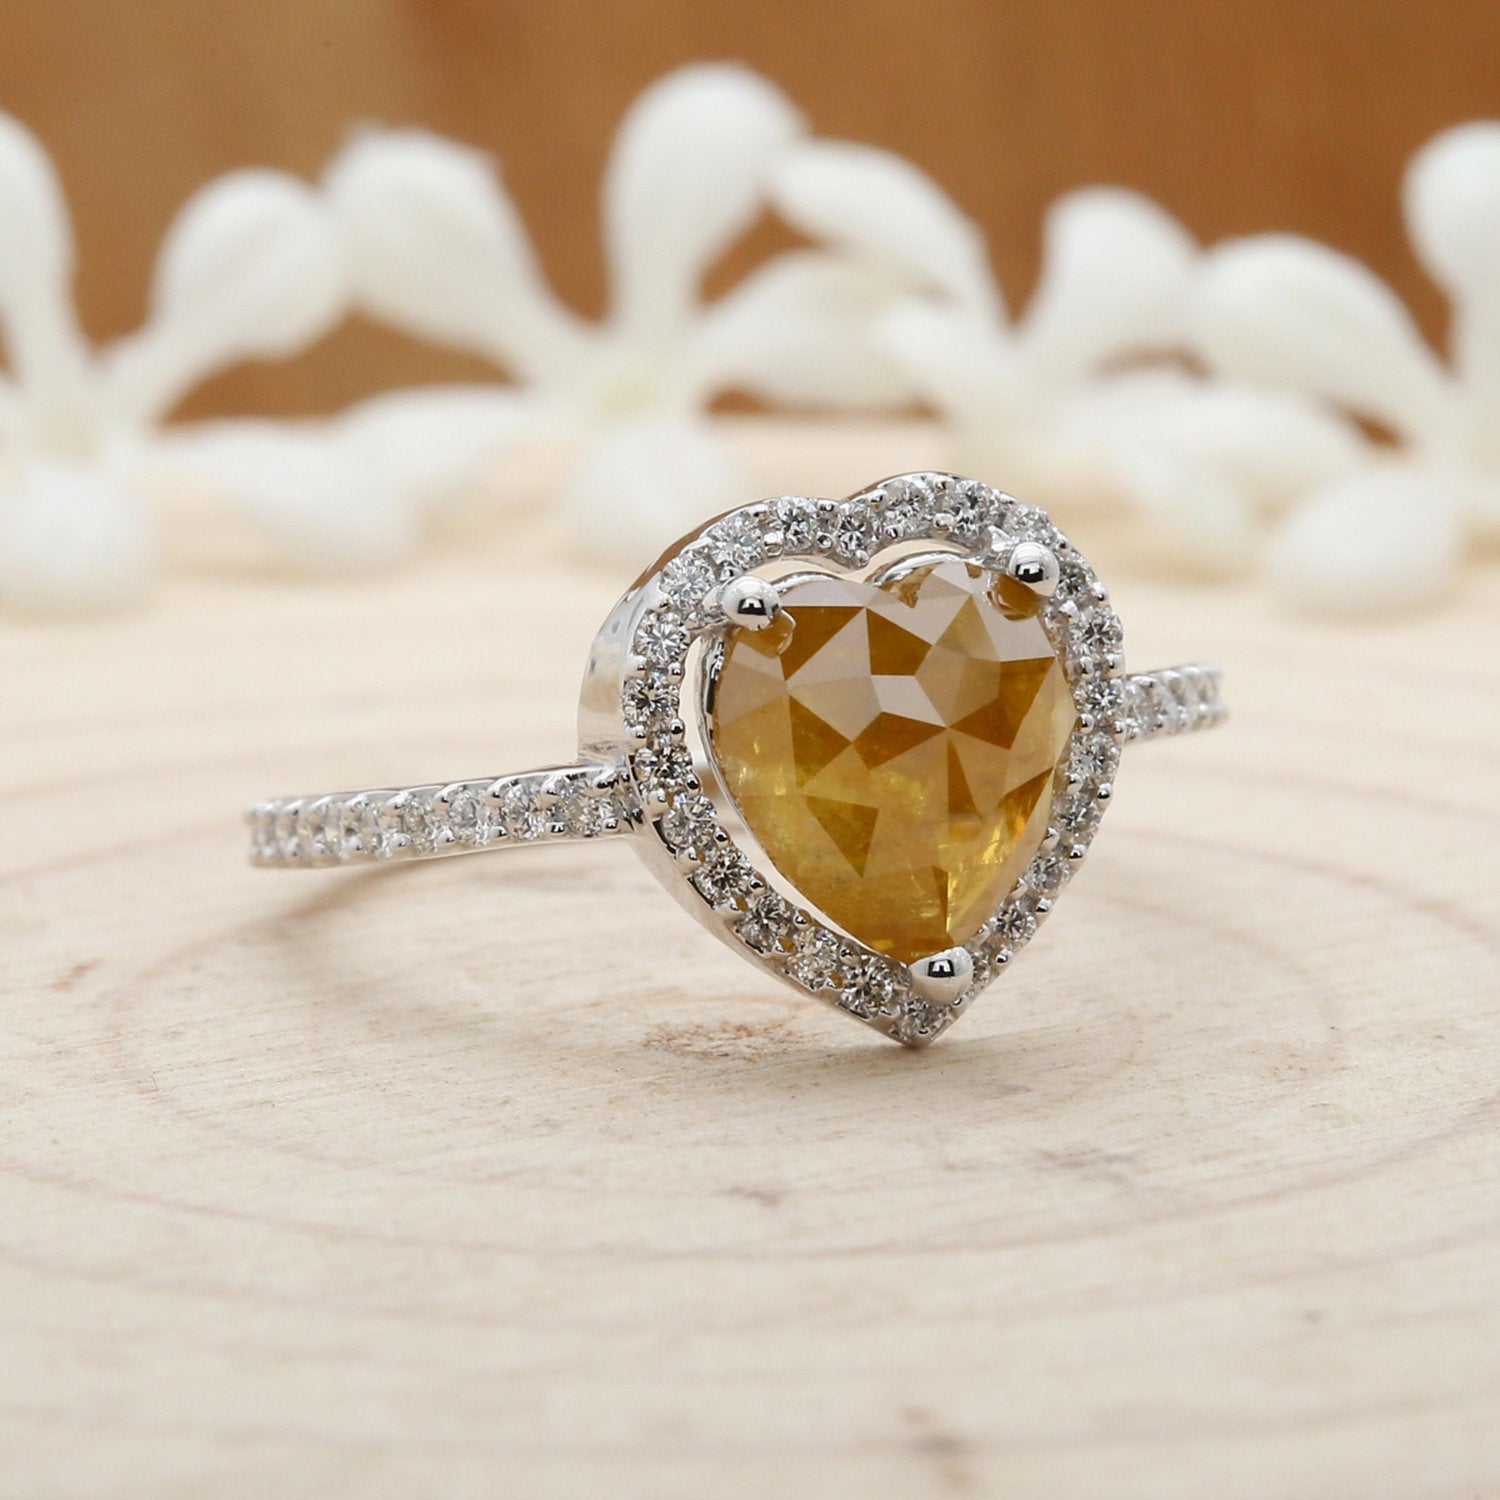 2.37 ct Yellow Heart Diamond 14K Solid White Gold Ring Engagement Wedding Gift Ring LQ3020